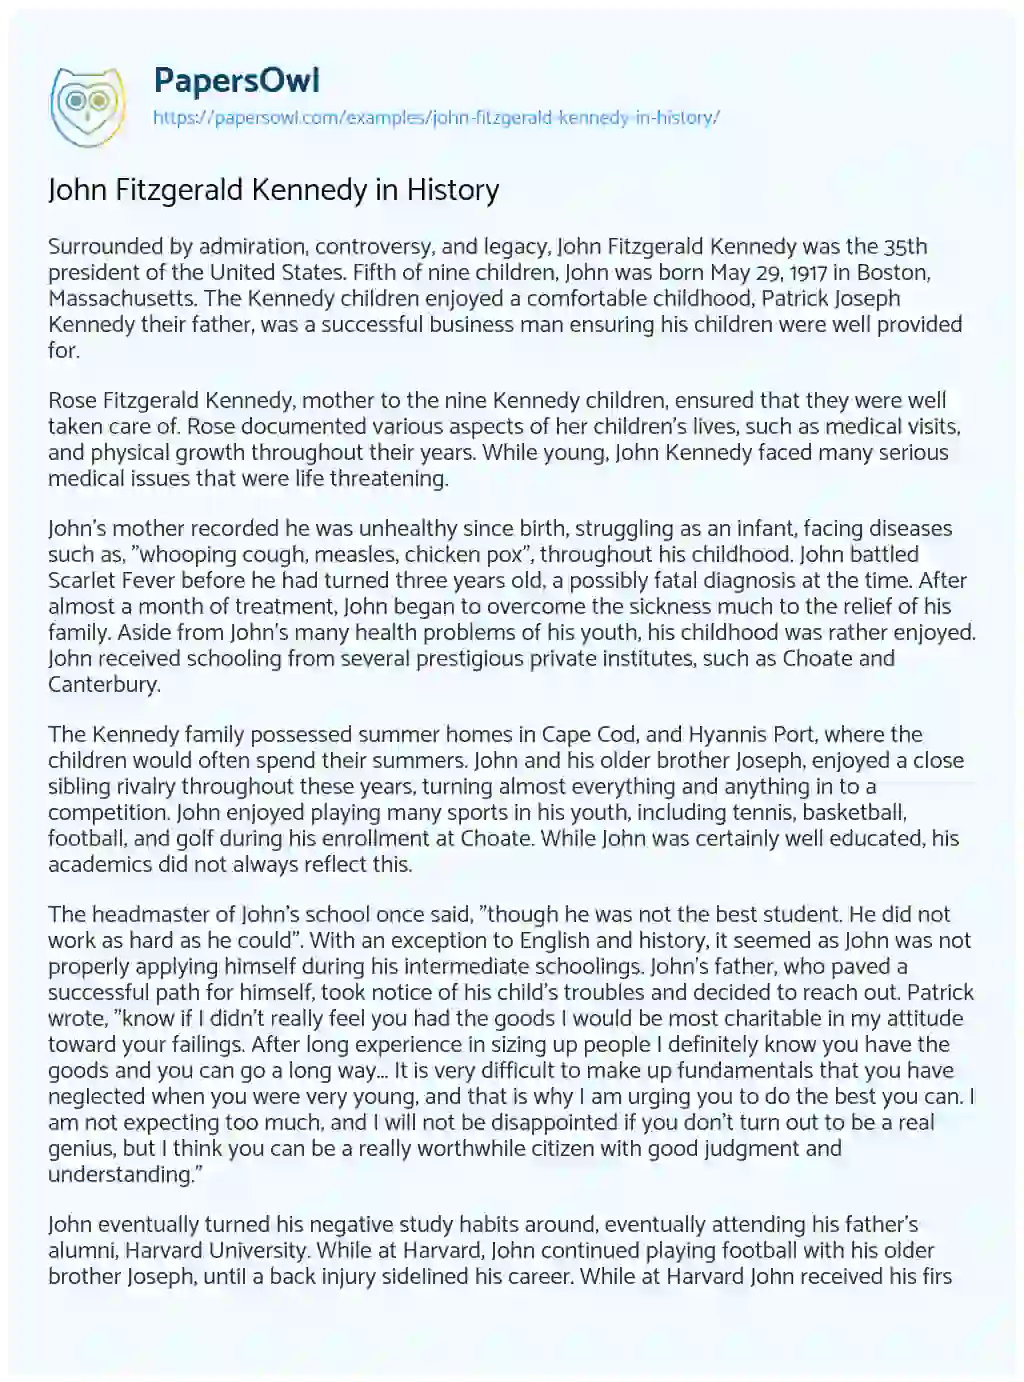 Essay on John Fitzgerald Kennedy in History